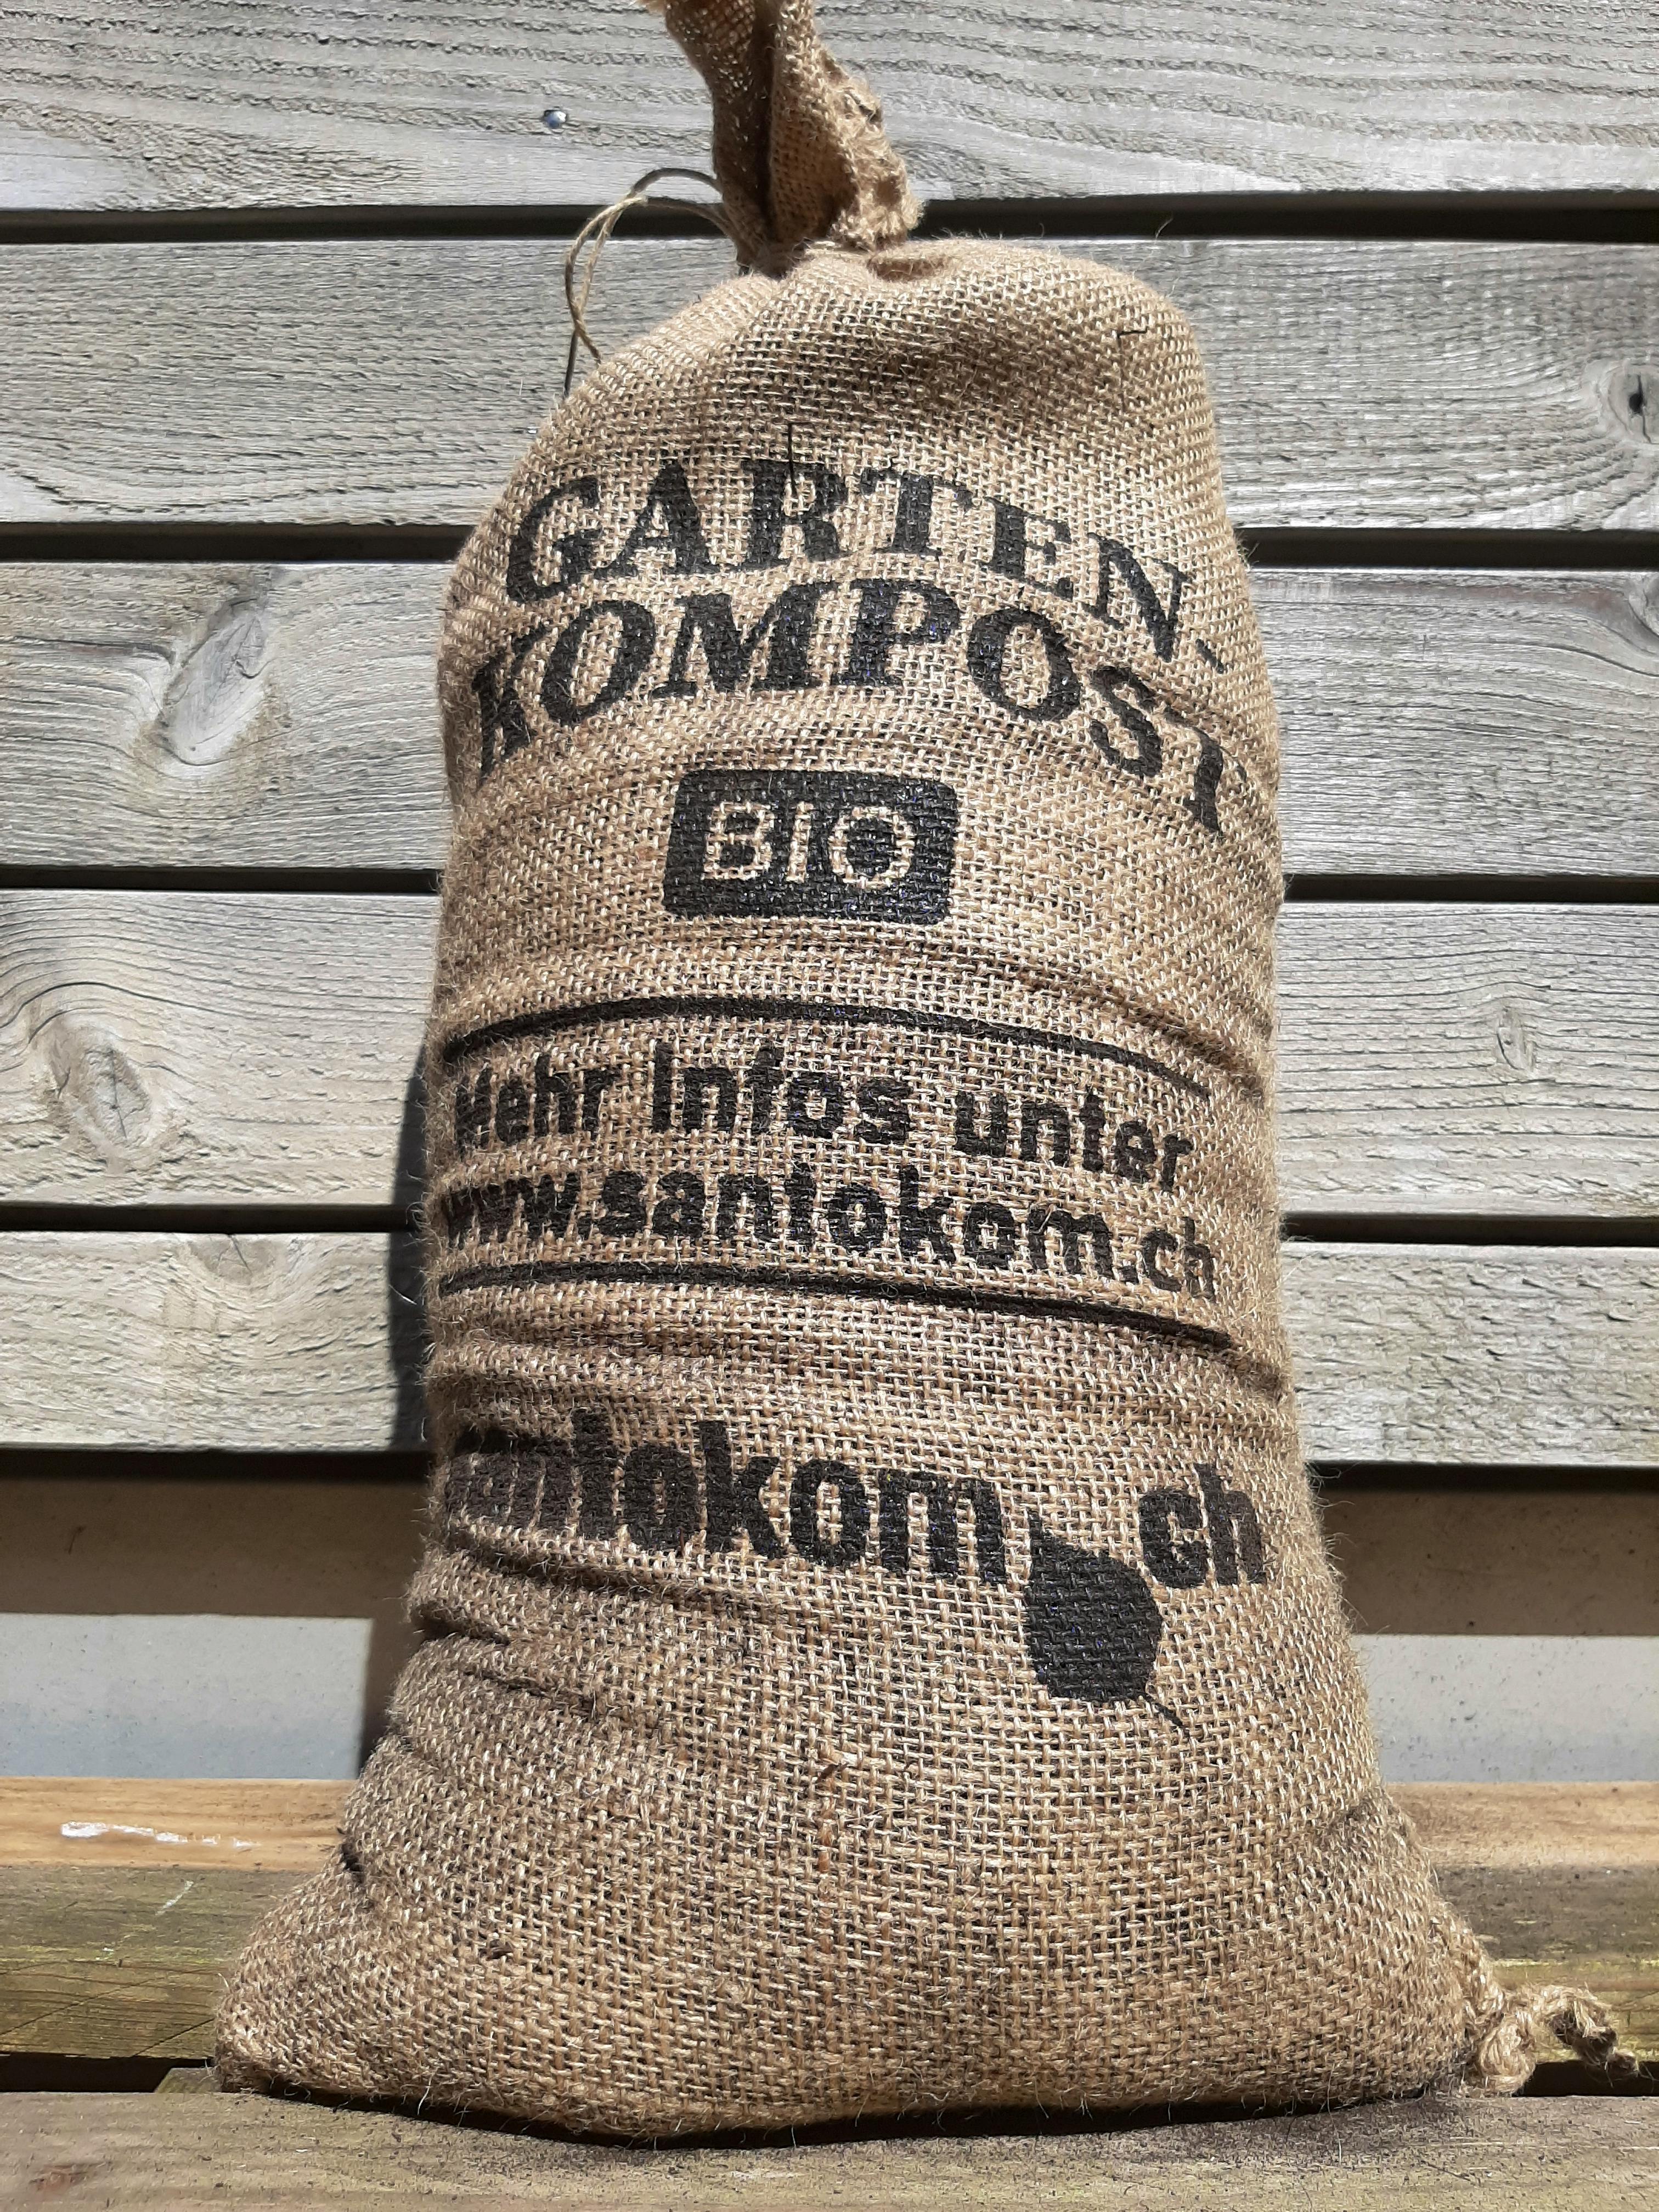 Premium Bio-Gartenkompost im Jutesack (25 Liter) 